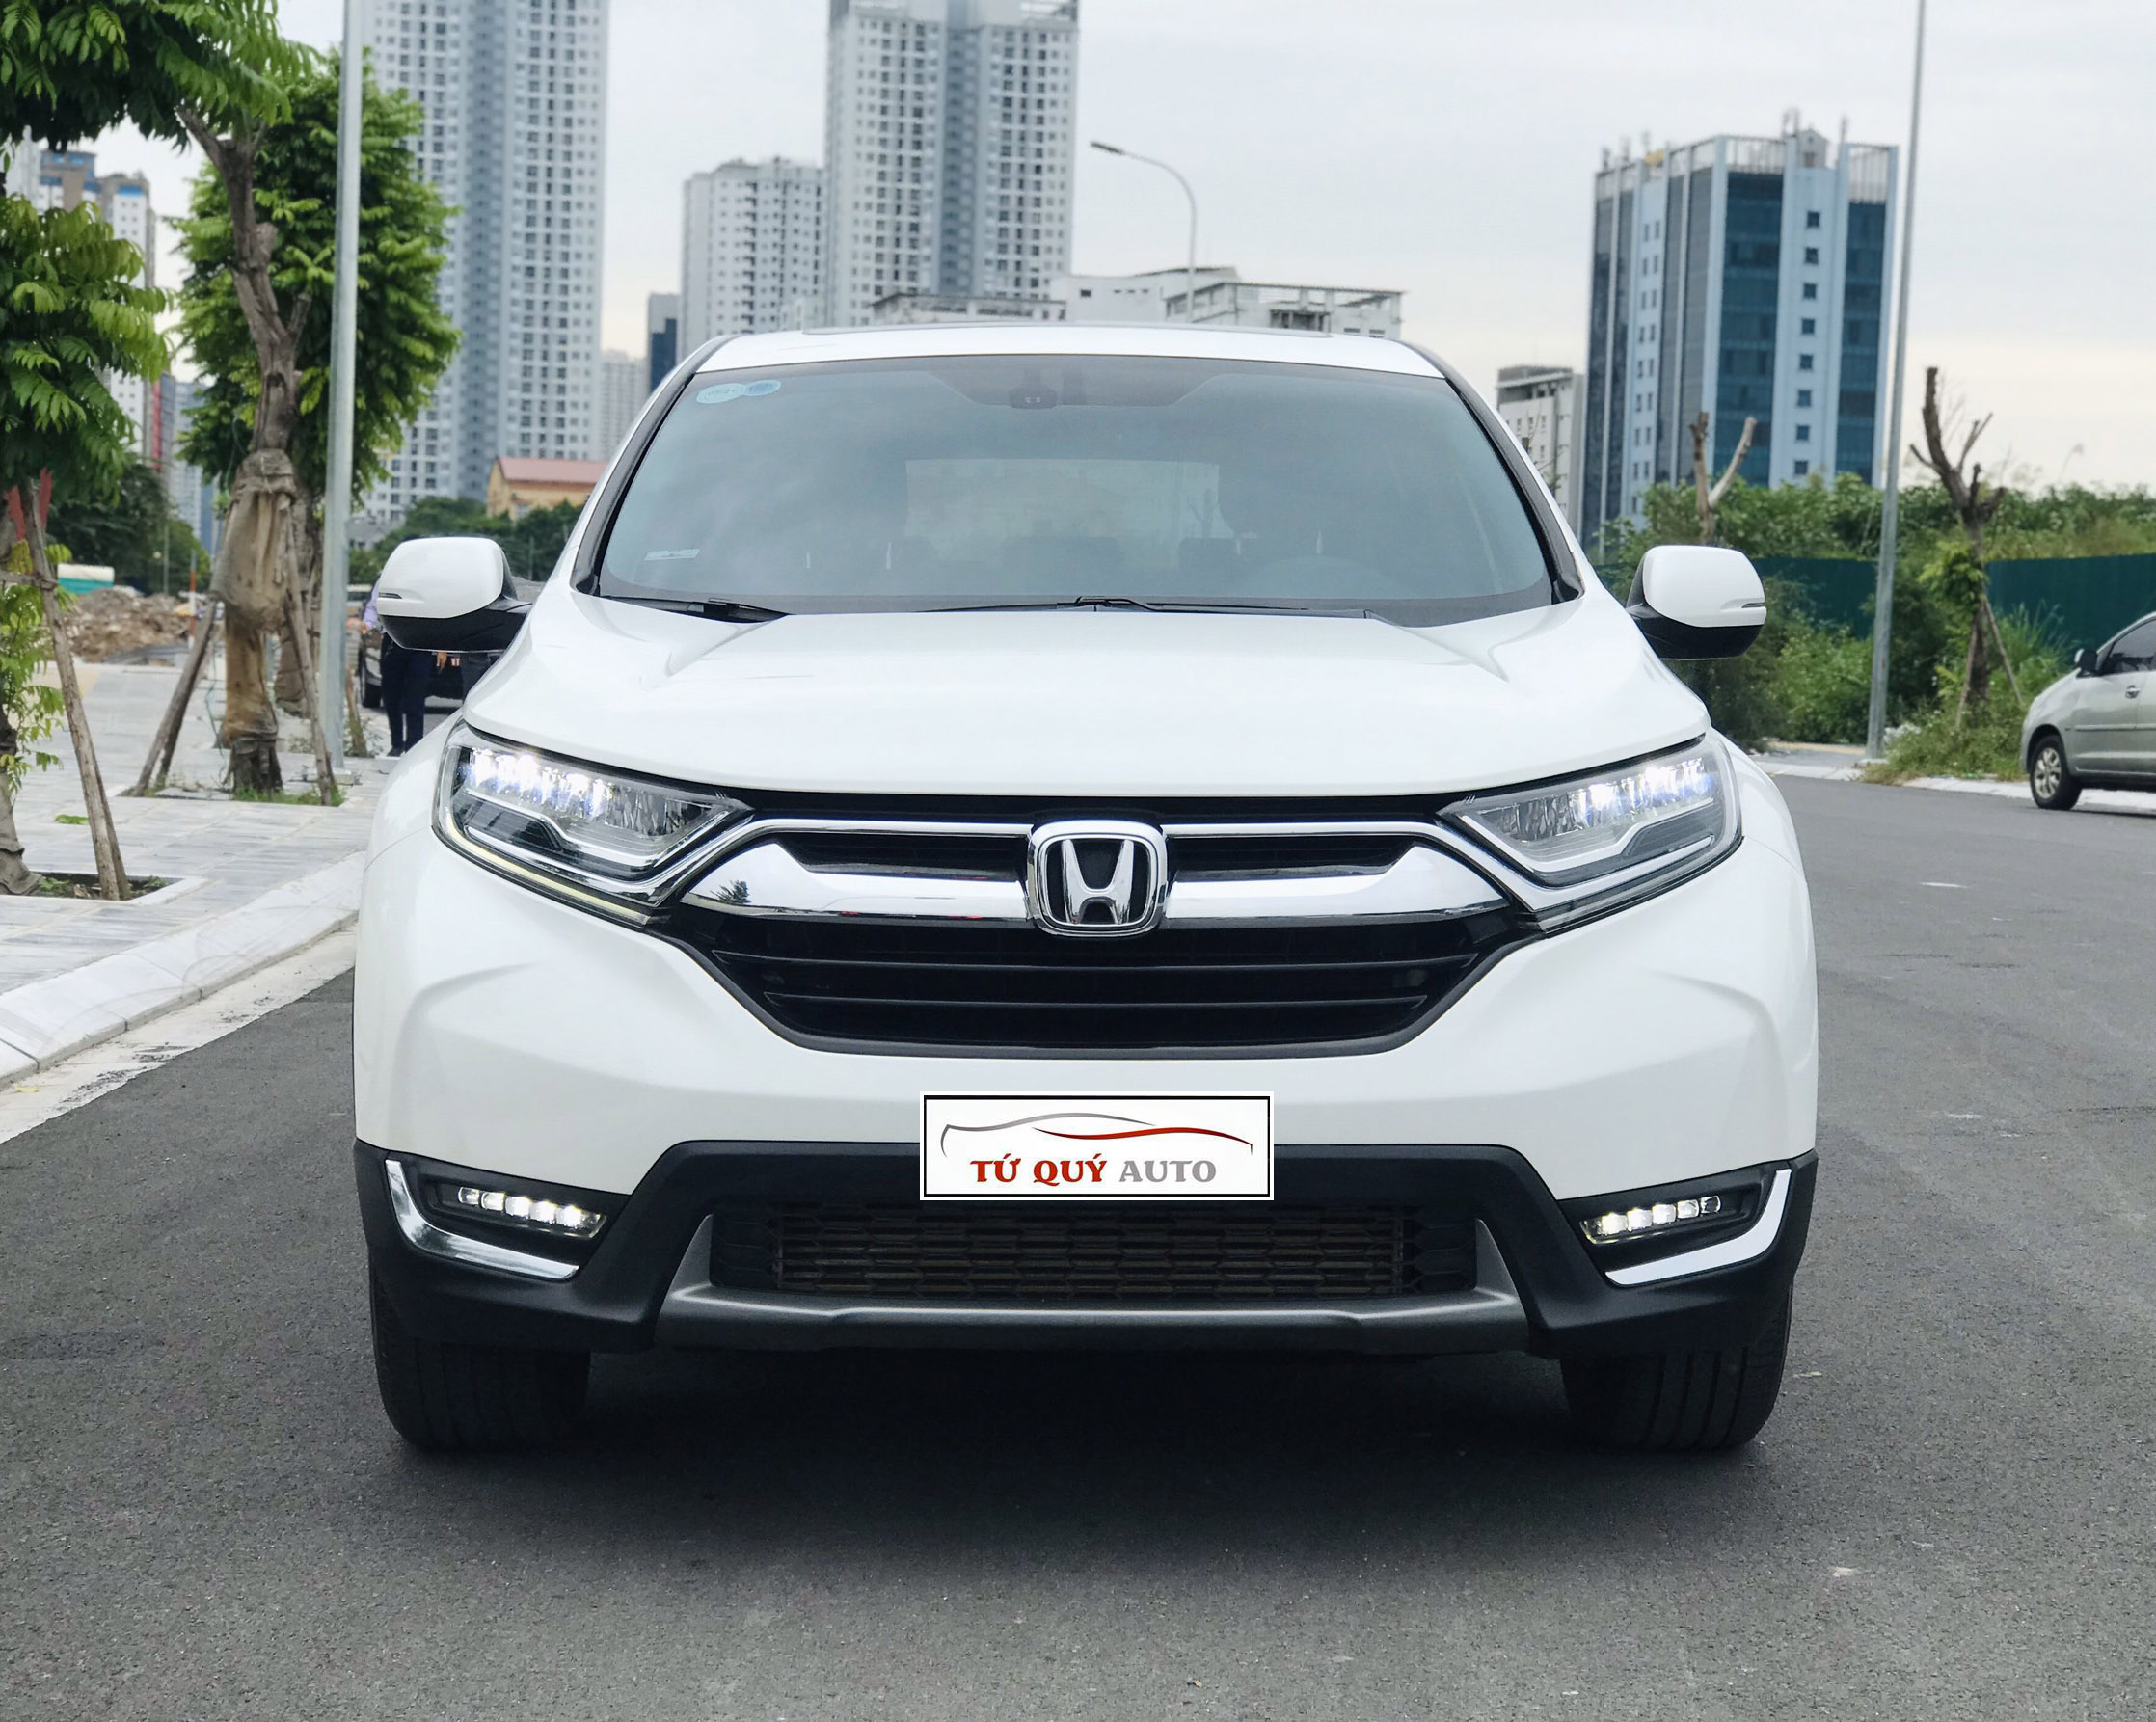 Tập tin2018 Honda CRV RW MY18 Sport 2WD wagon 20181022 01jpg   Wikipedia tiếng Việt